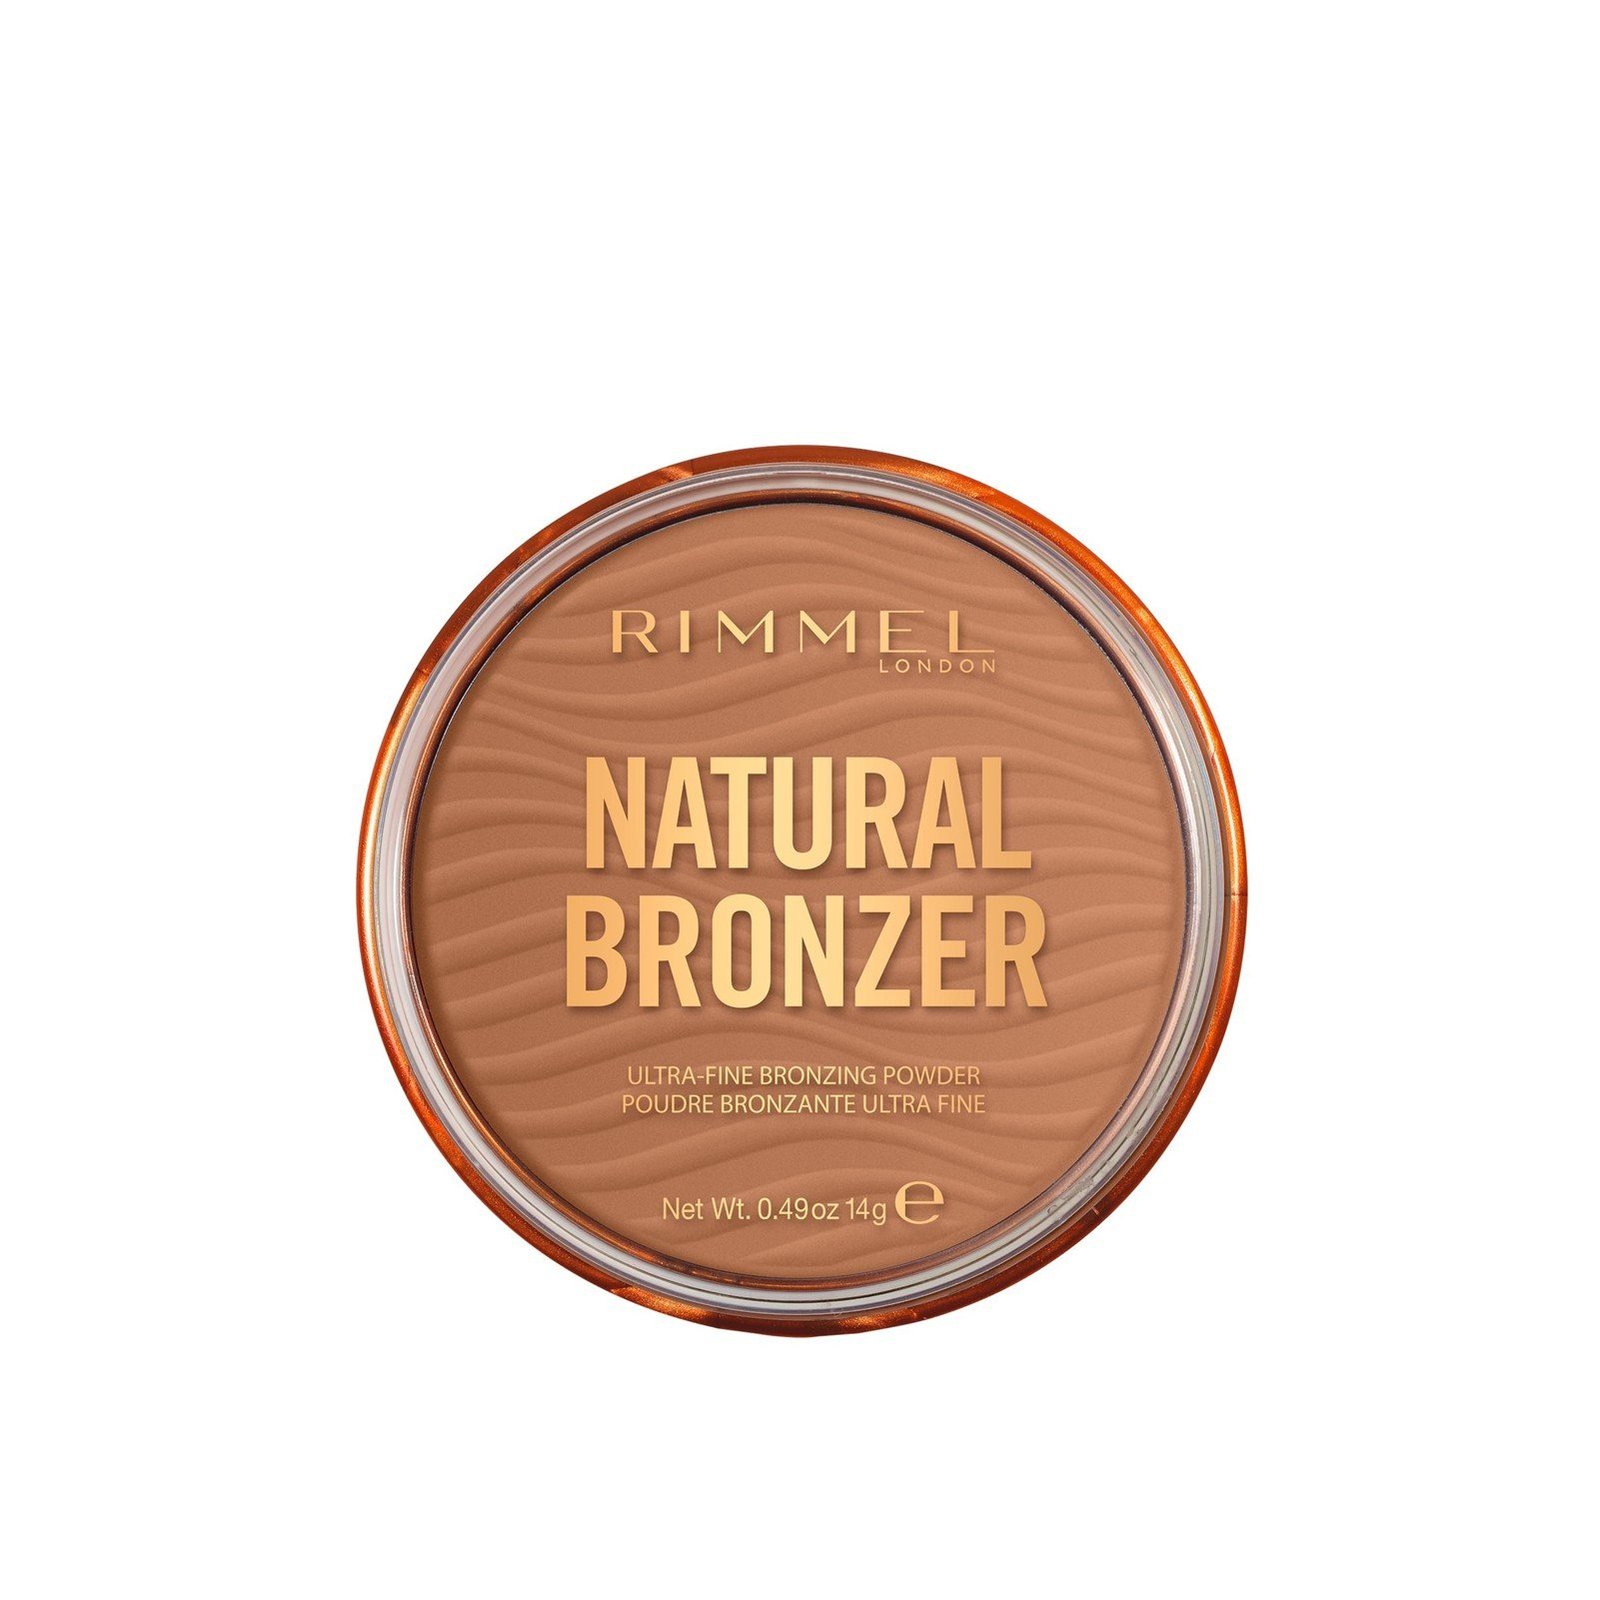 Rimmel London Natural Bronzer Waterproof Bronzing Powder SPF15 002 14g